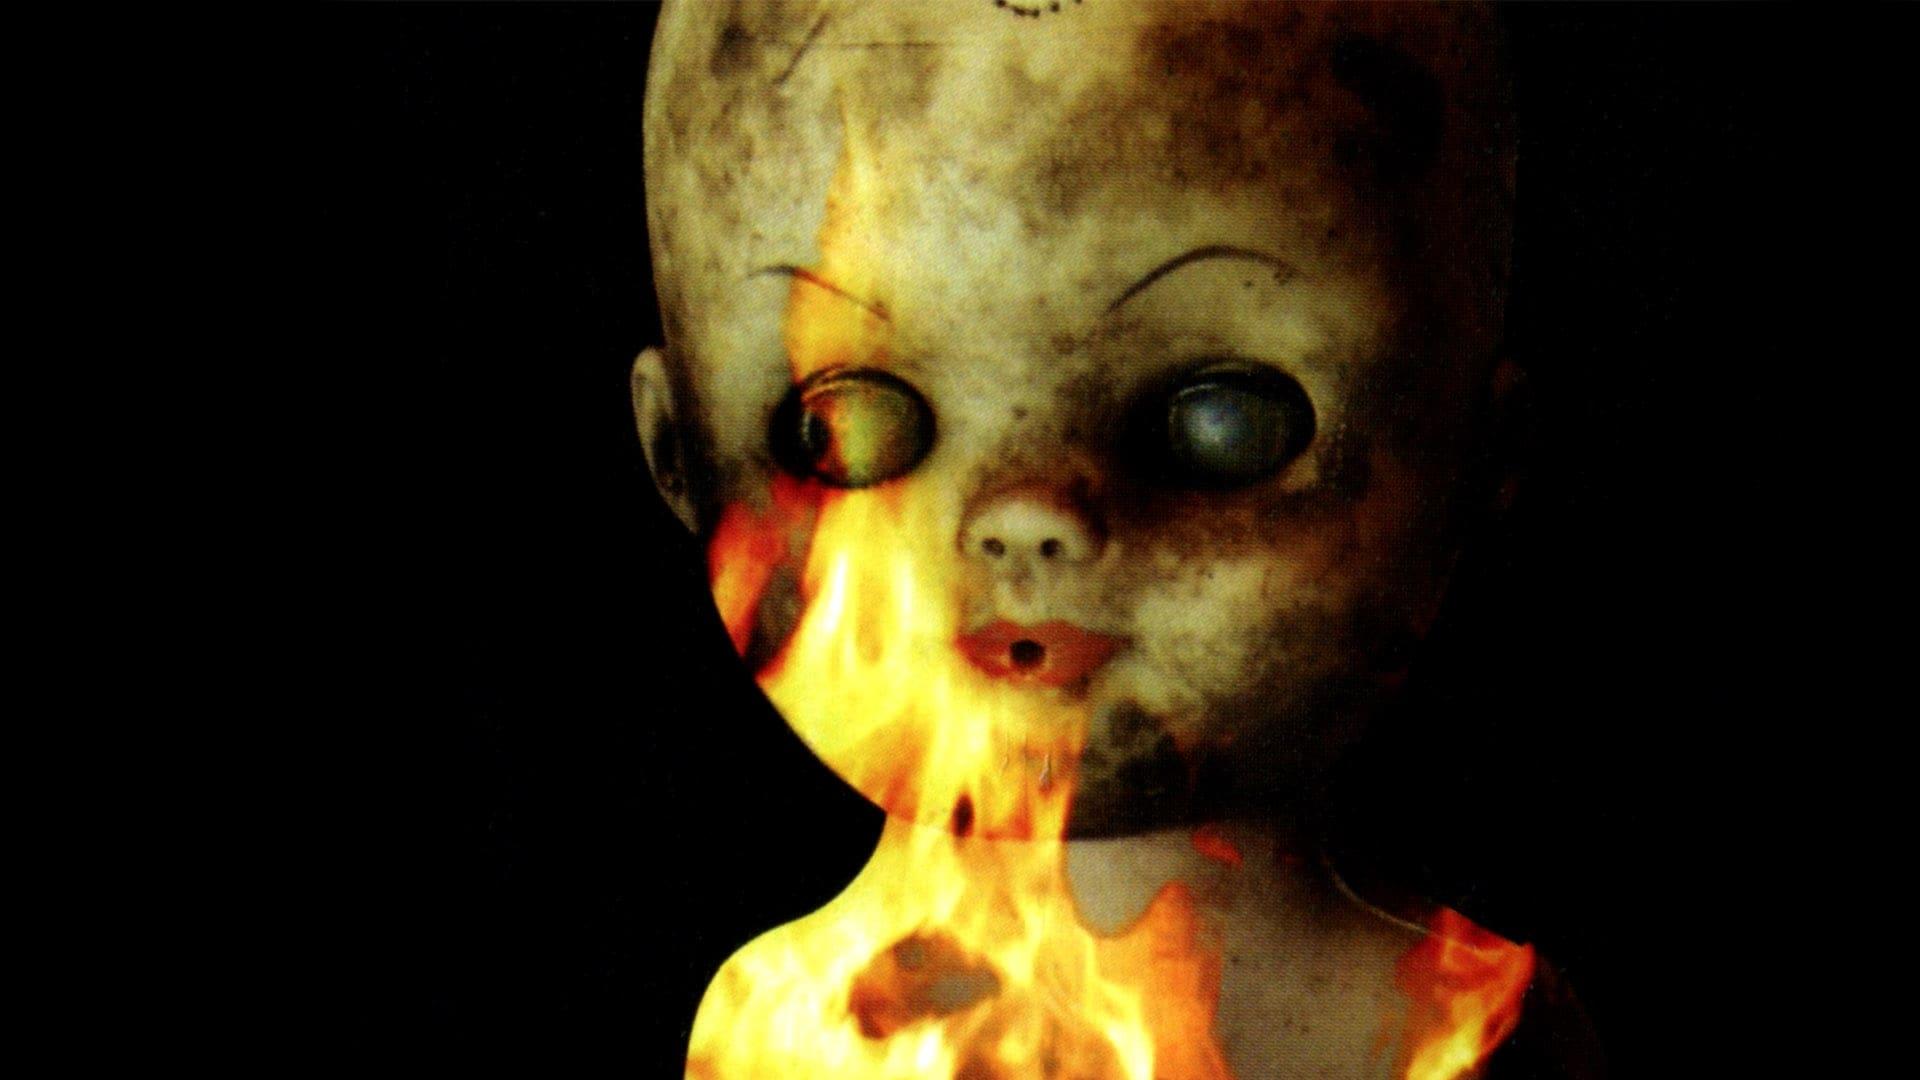 666: The Demon Child backdrop